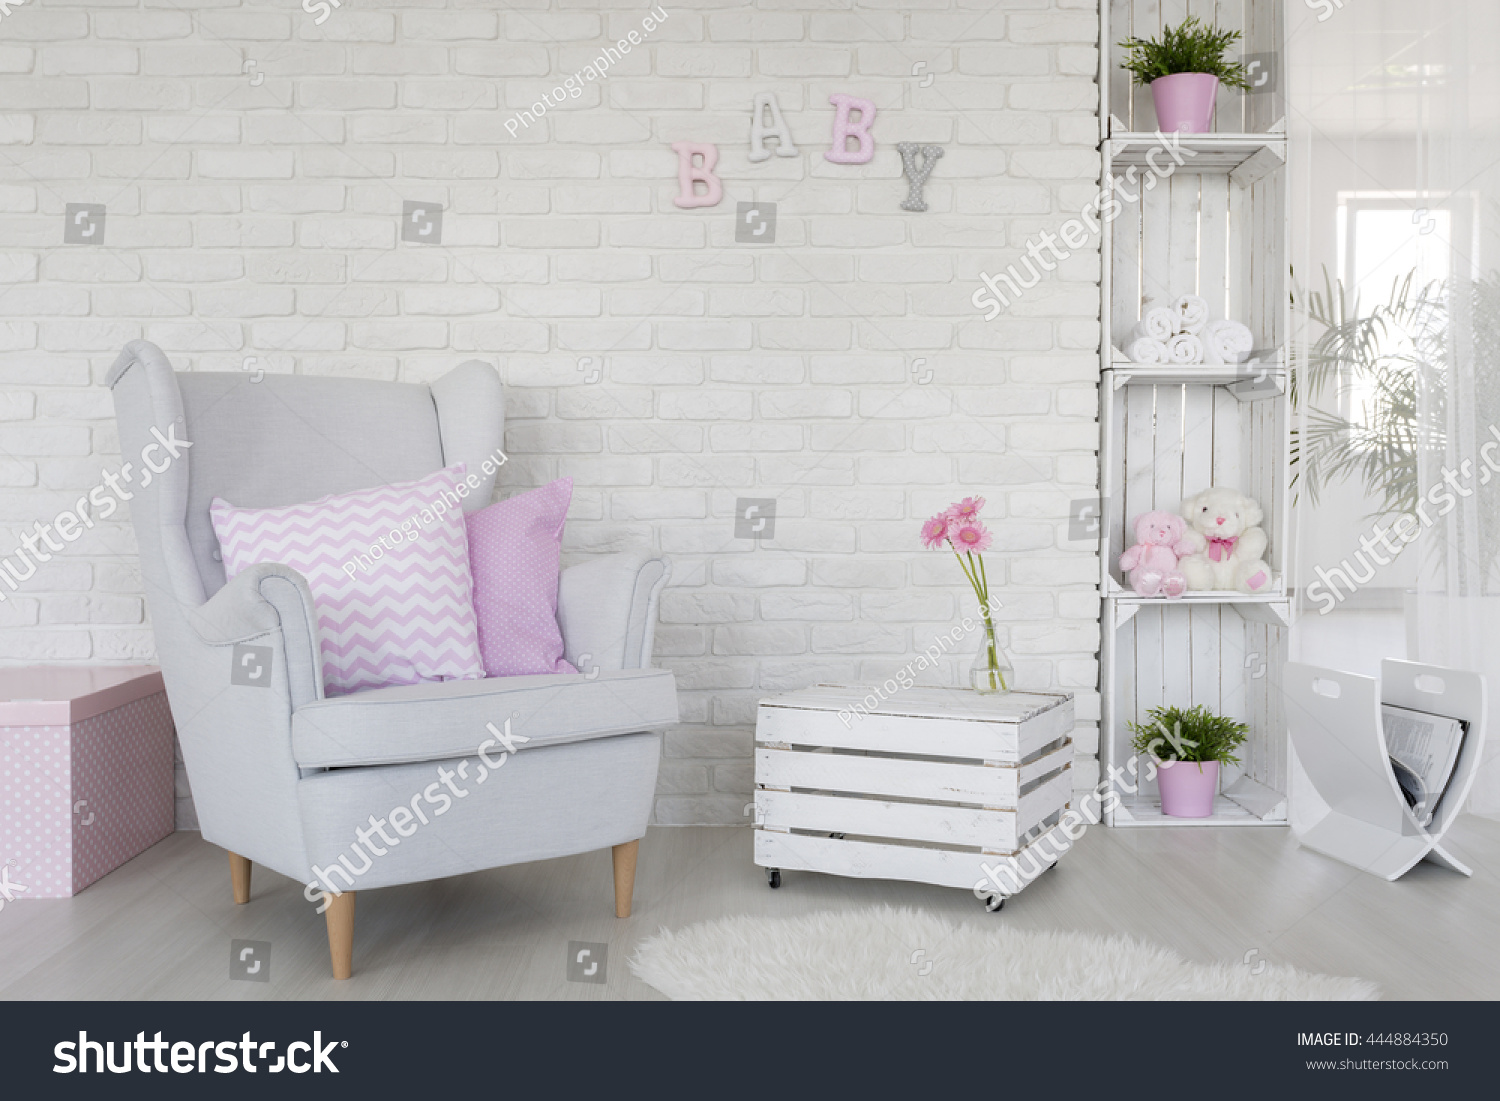 the brick baby furniture